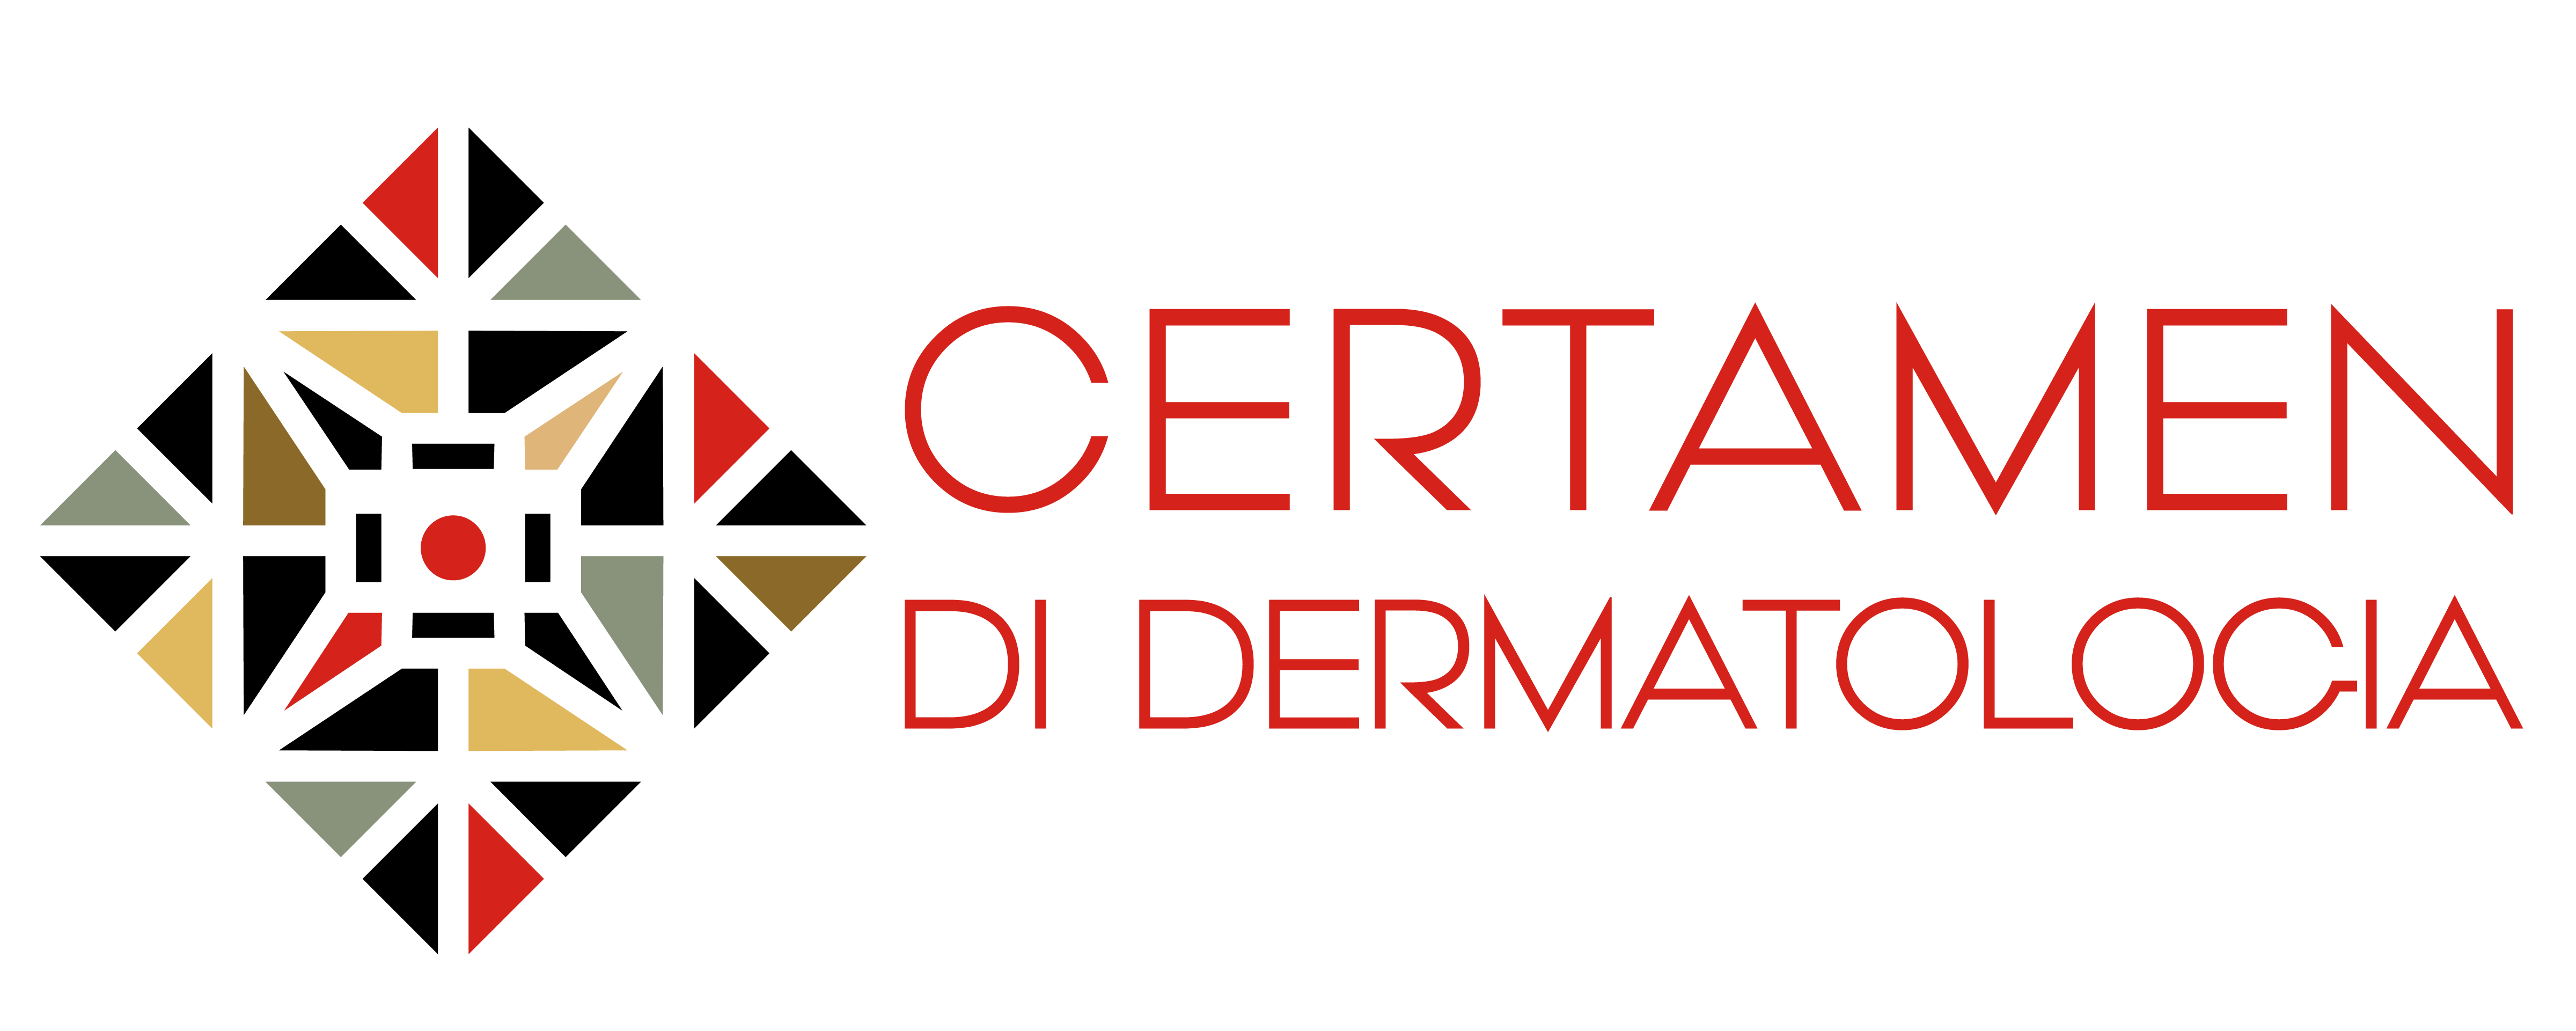 CERTAMEN di DERMATOLOGIA logo